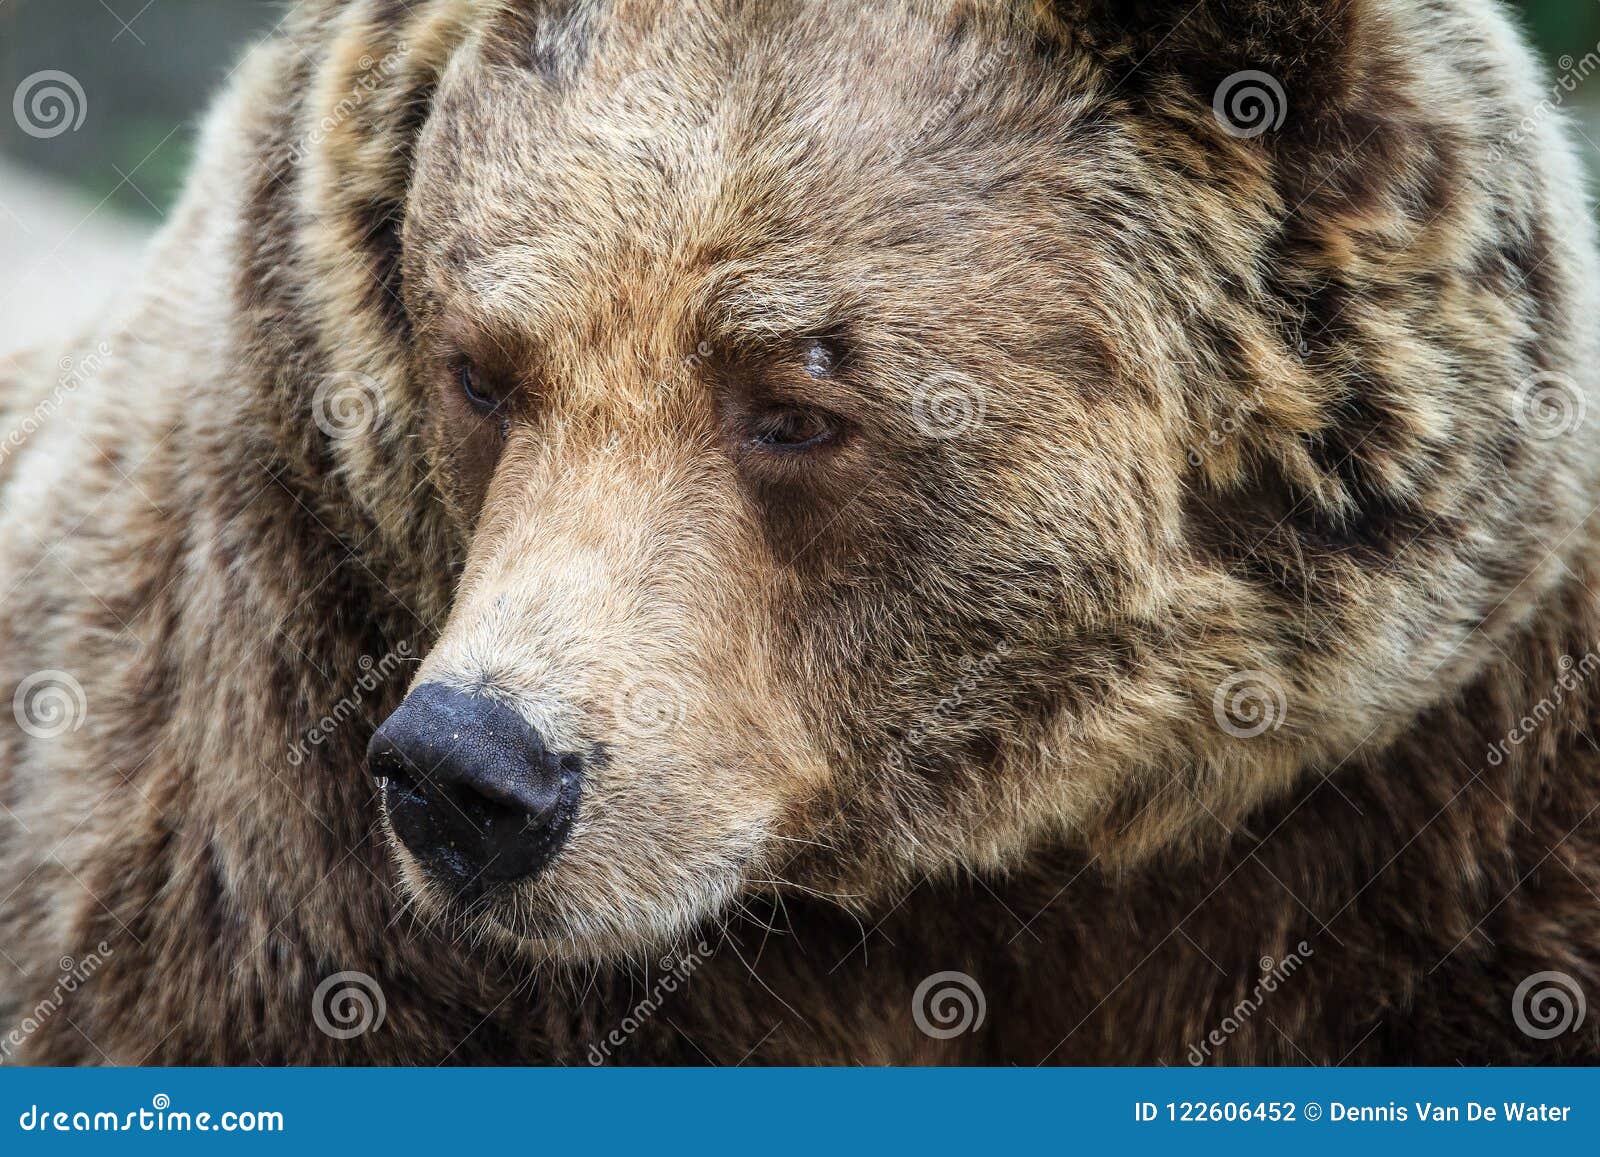 eurasian brown bear side portrait